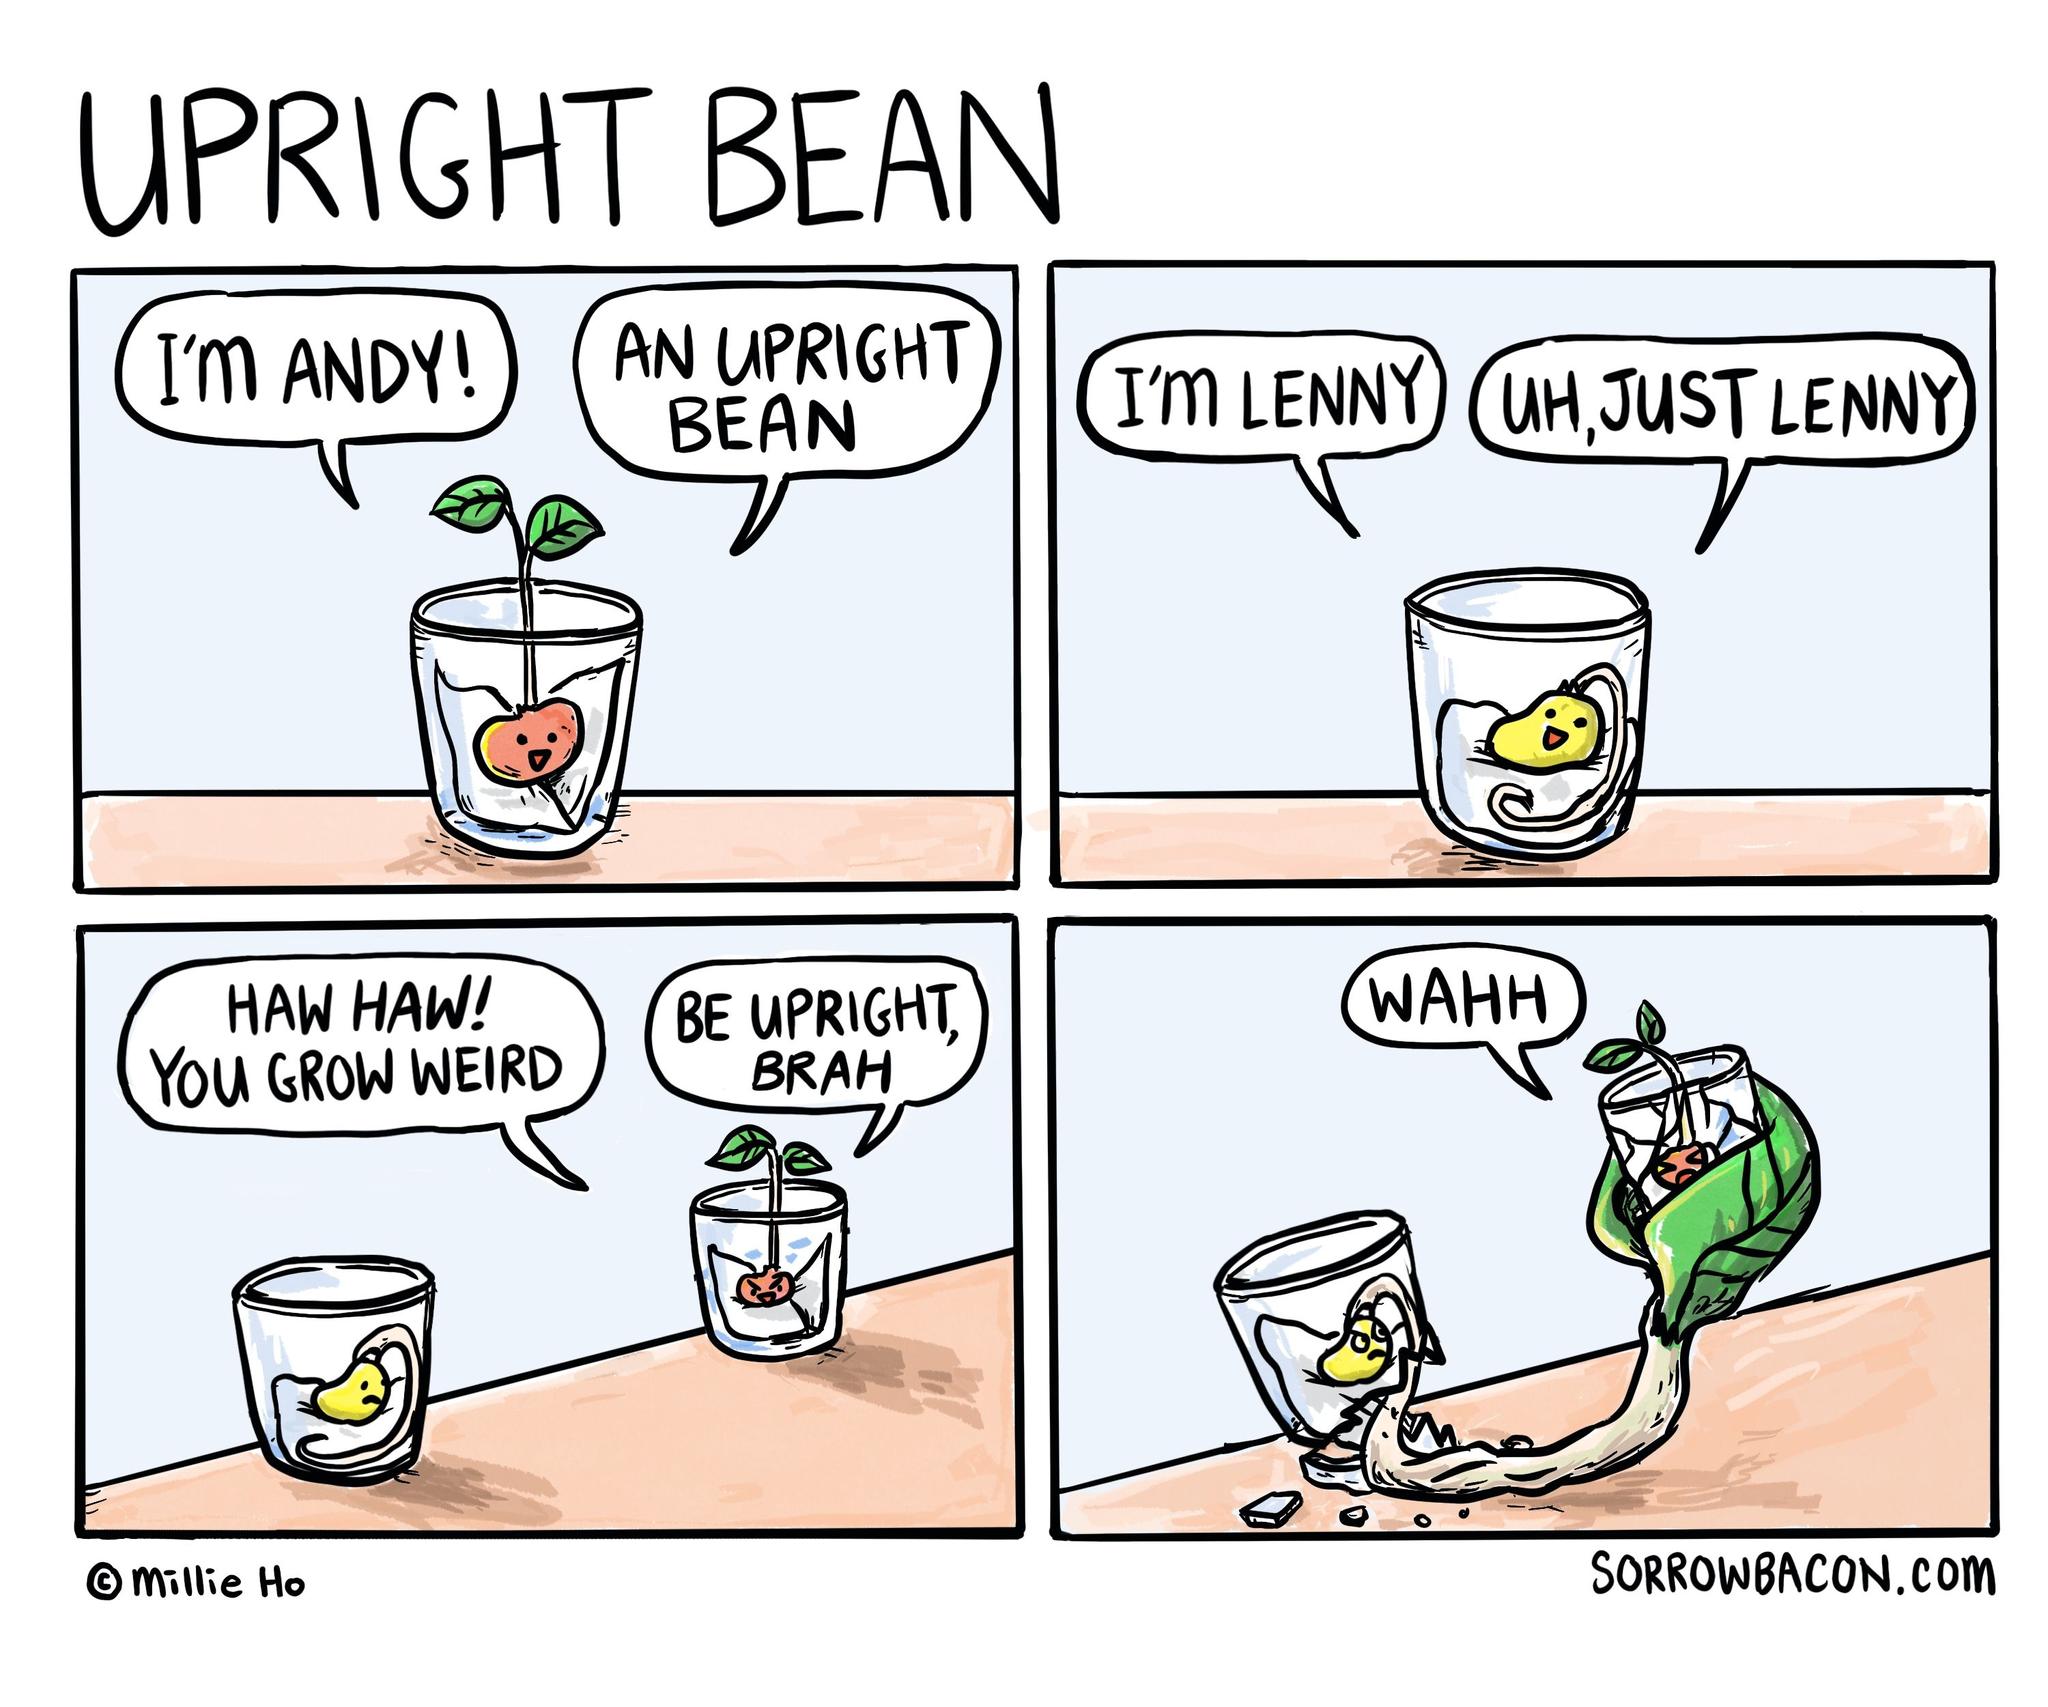 Upright Bean sorrowbacon comic